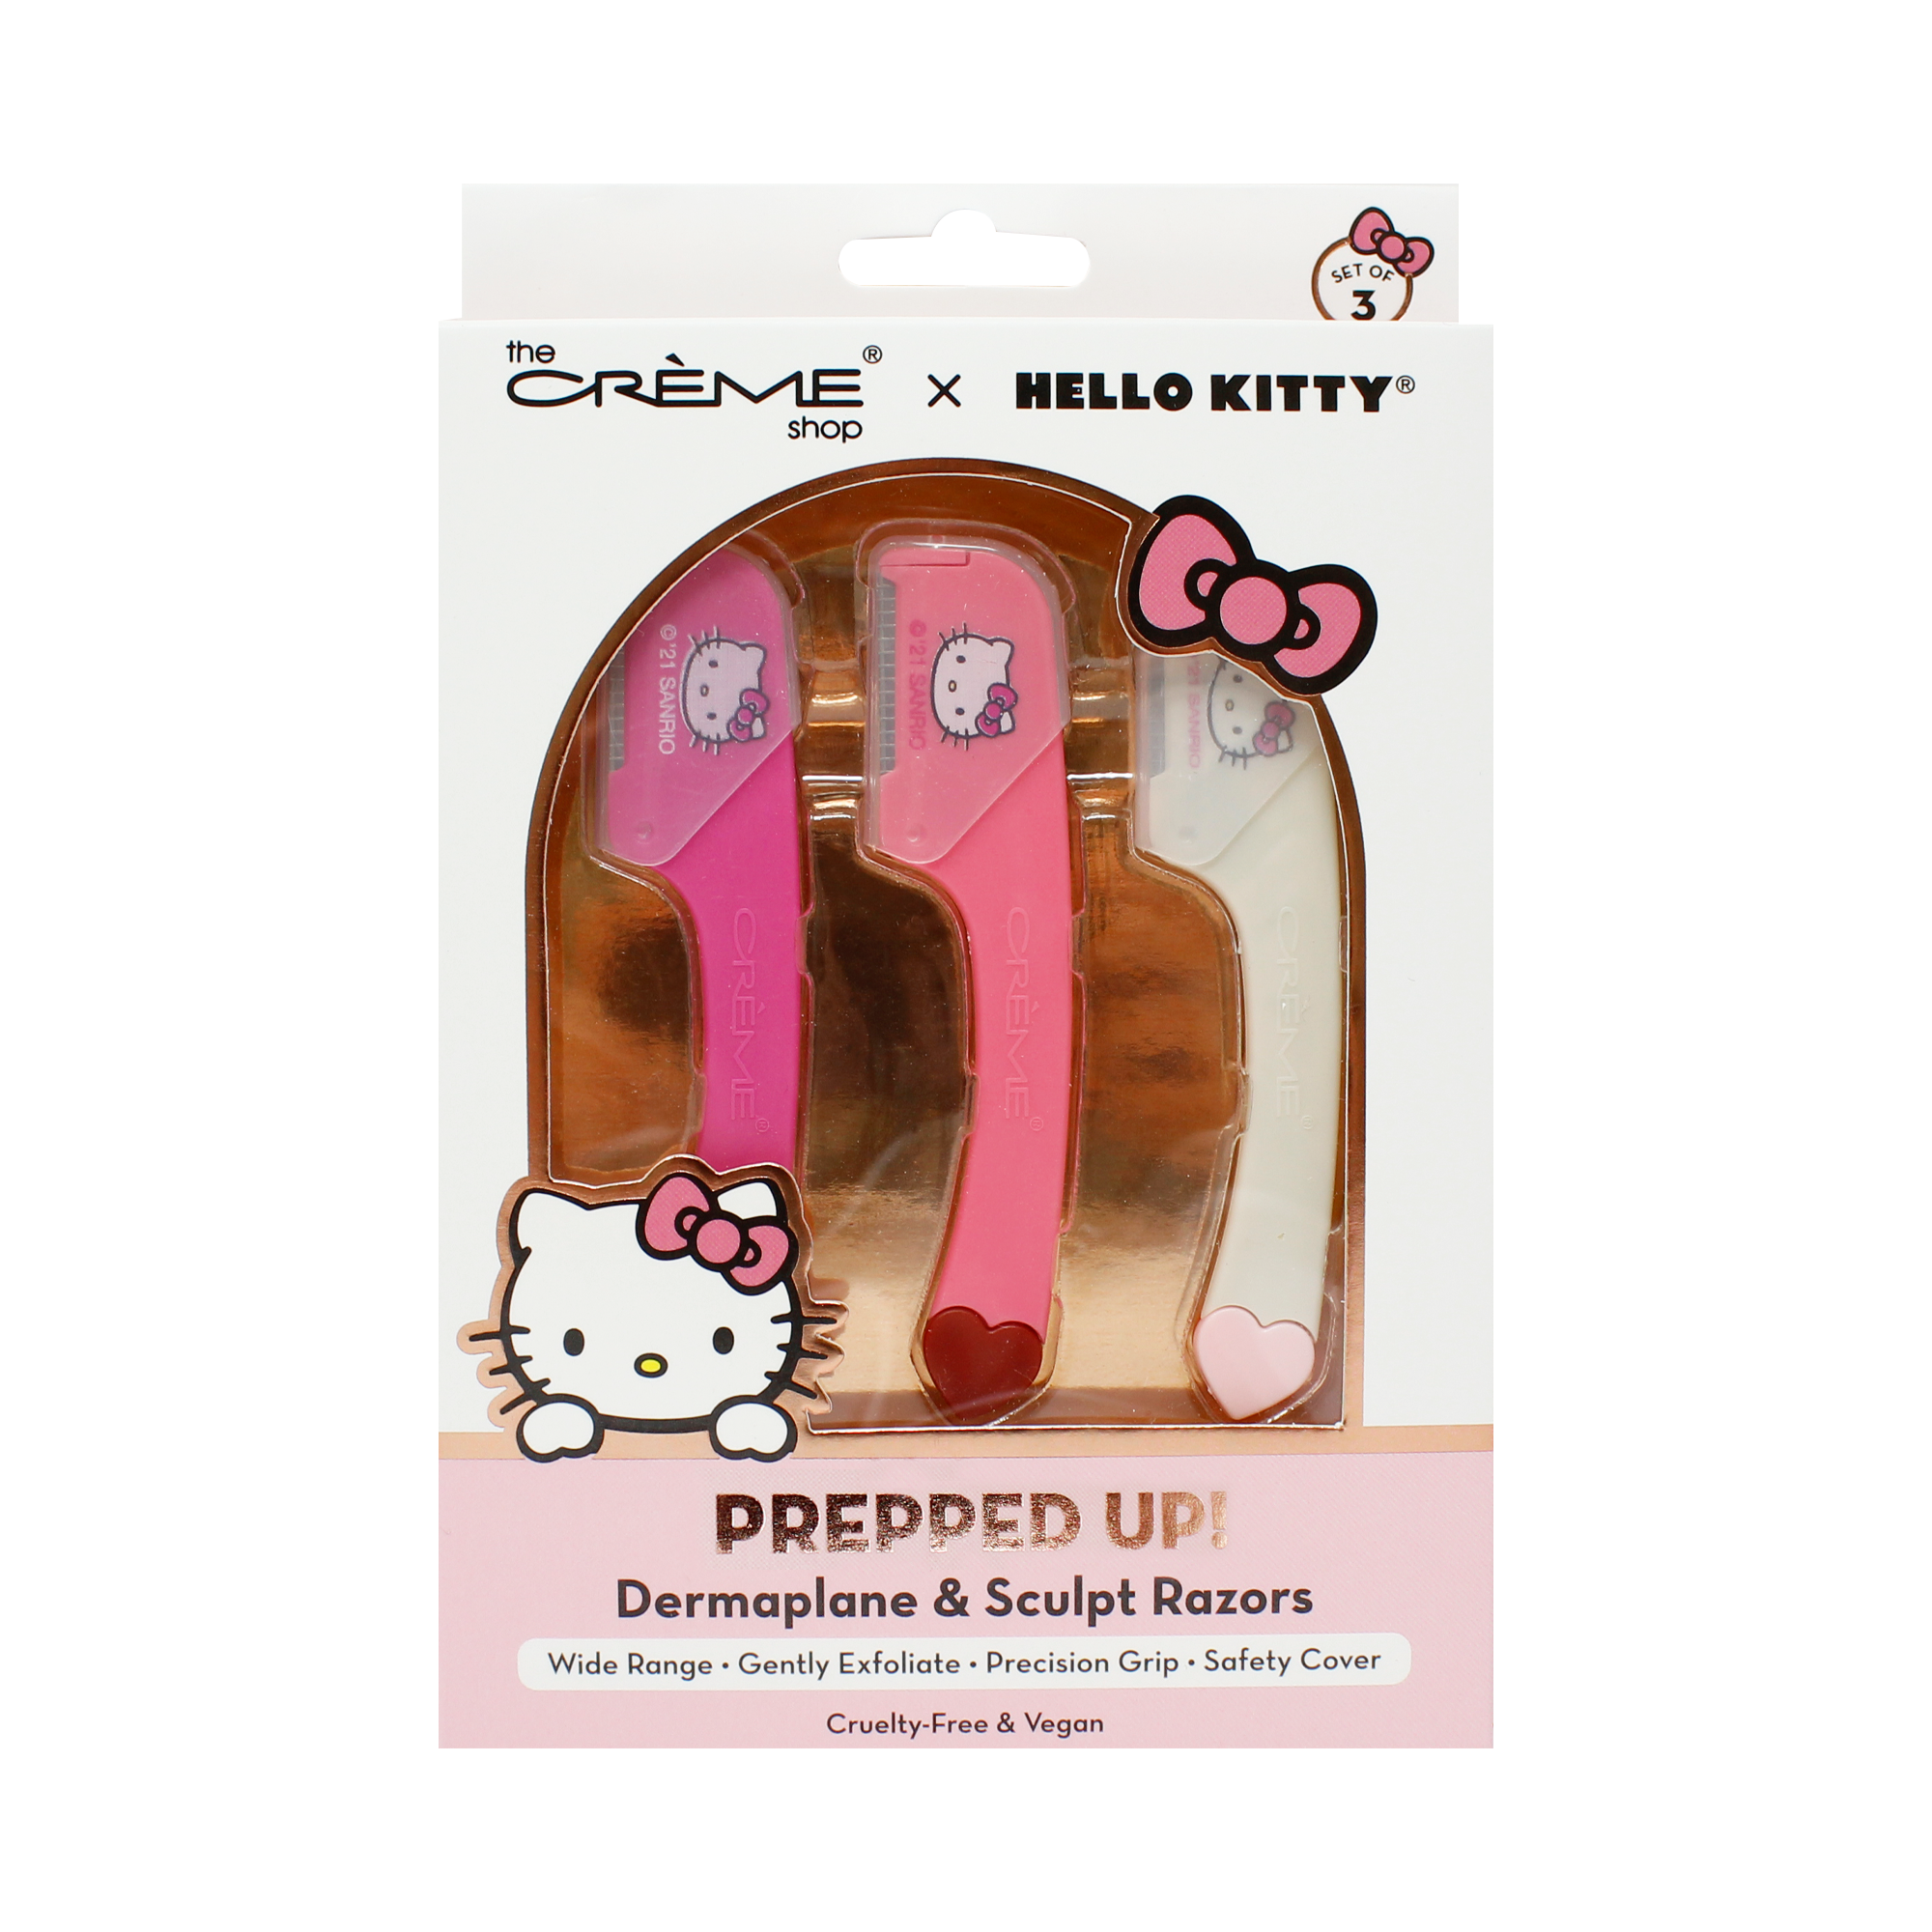 Hello Kitty x The Crème Shop Prepped Up! Dermaplane and Sculpt Razors (Pink) Beauty The Crème Shop   